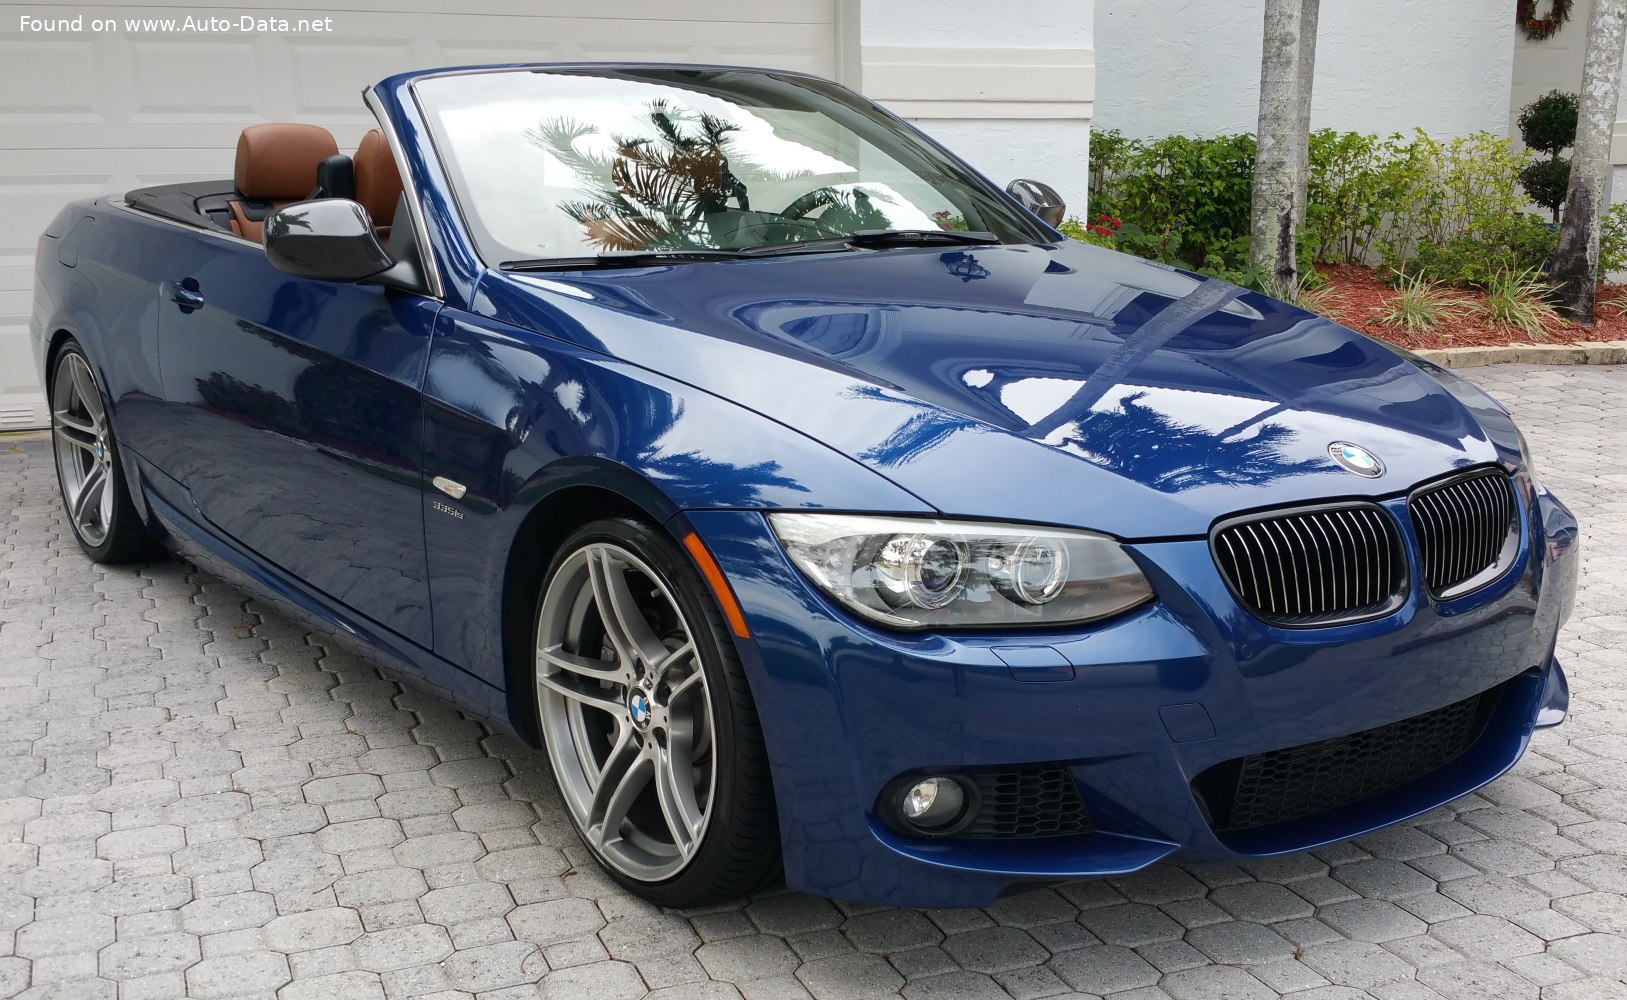 https://www.auto-data.net/images/f98/BMW-3-Series-Convertible-E93-LCI-facelift-2010.jpg